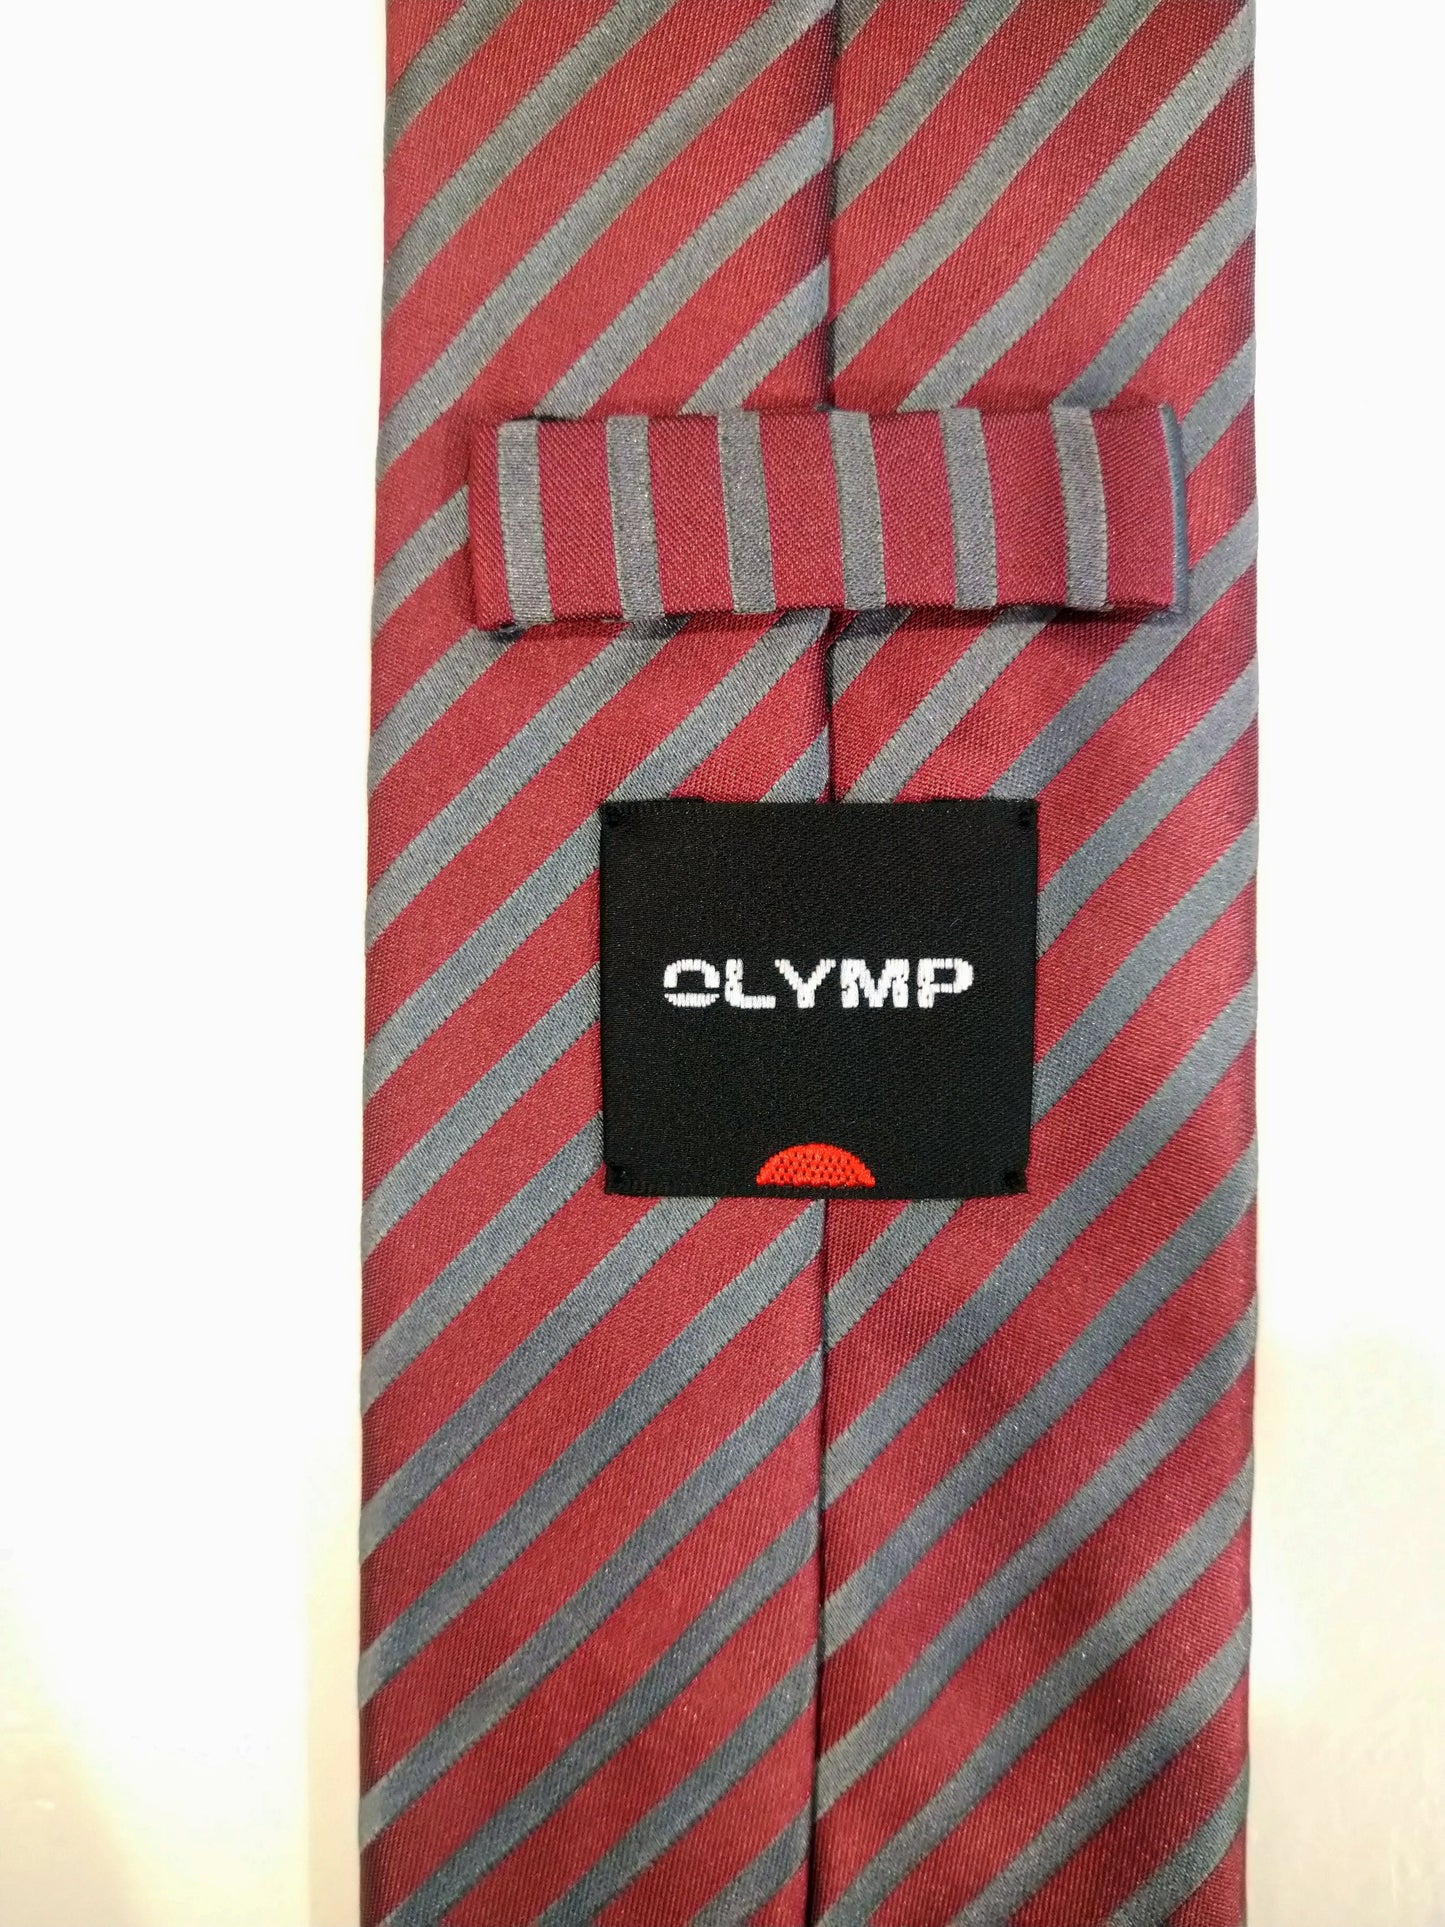 Olymp Silk Tie. Rosa / gris rayado.